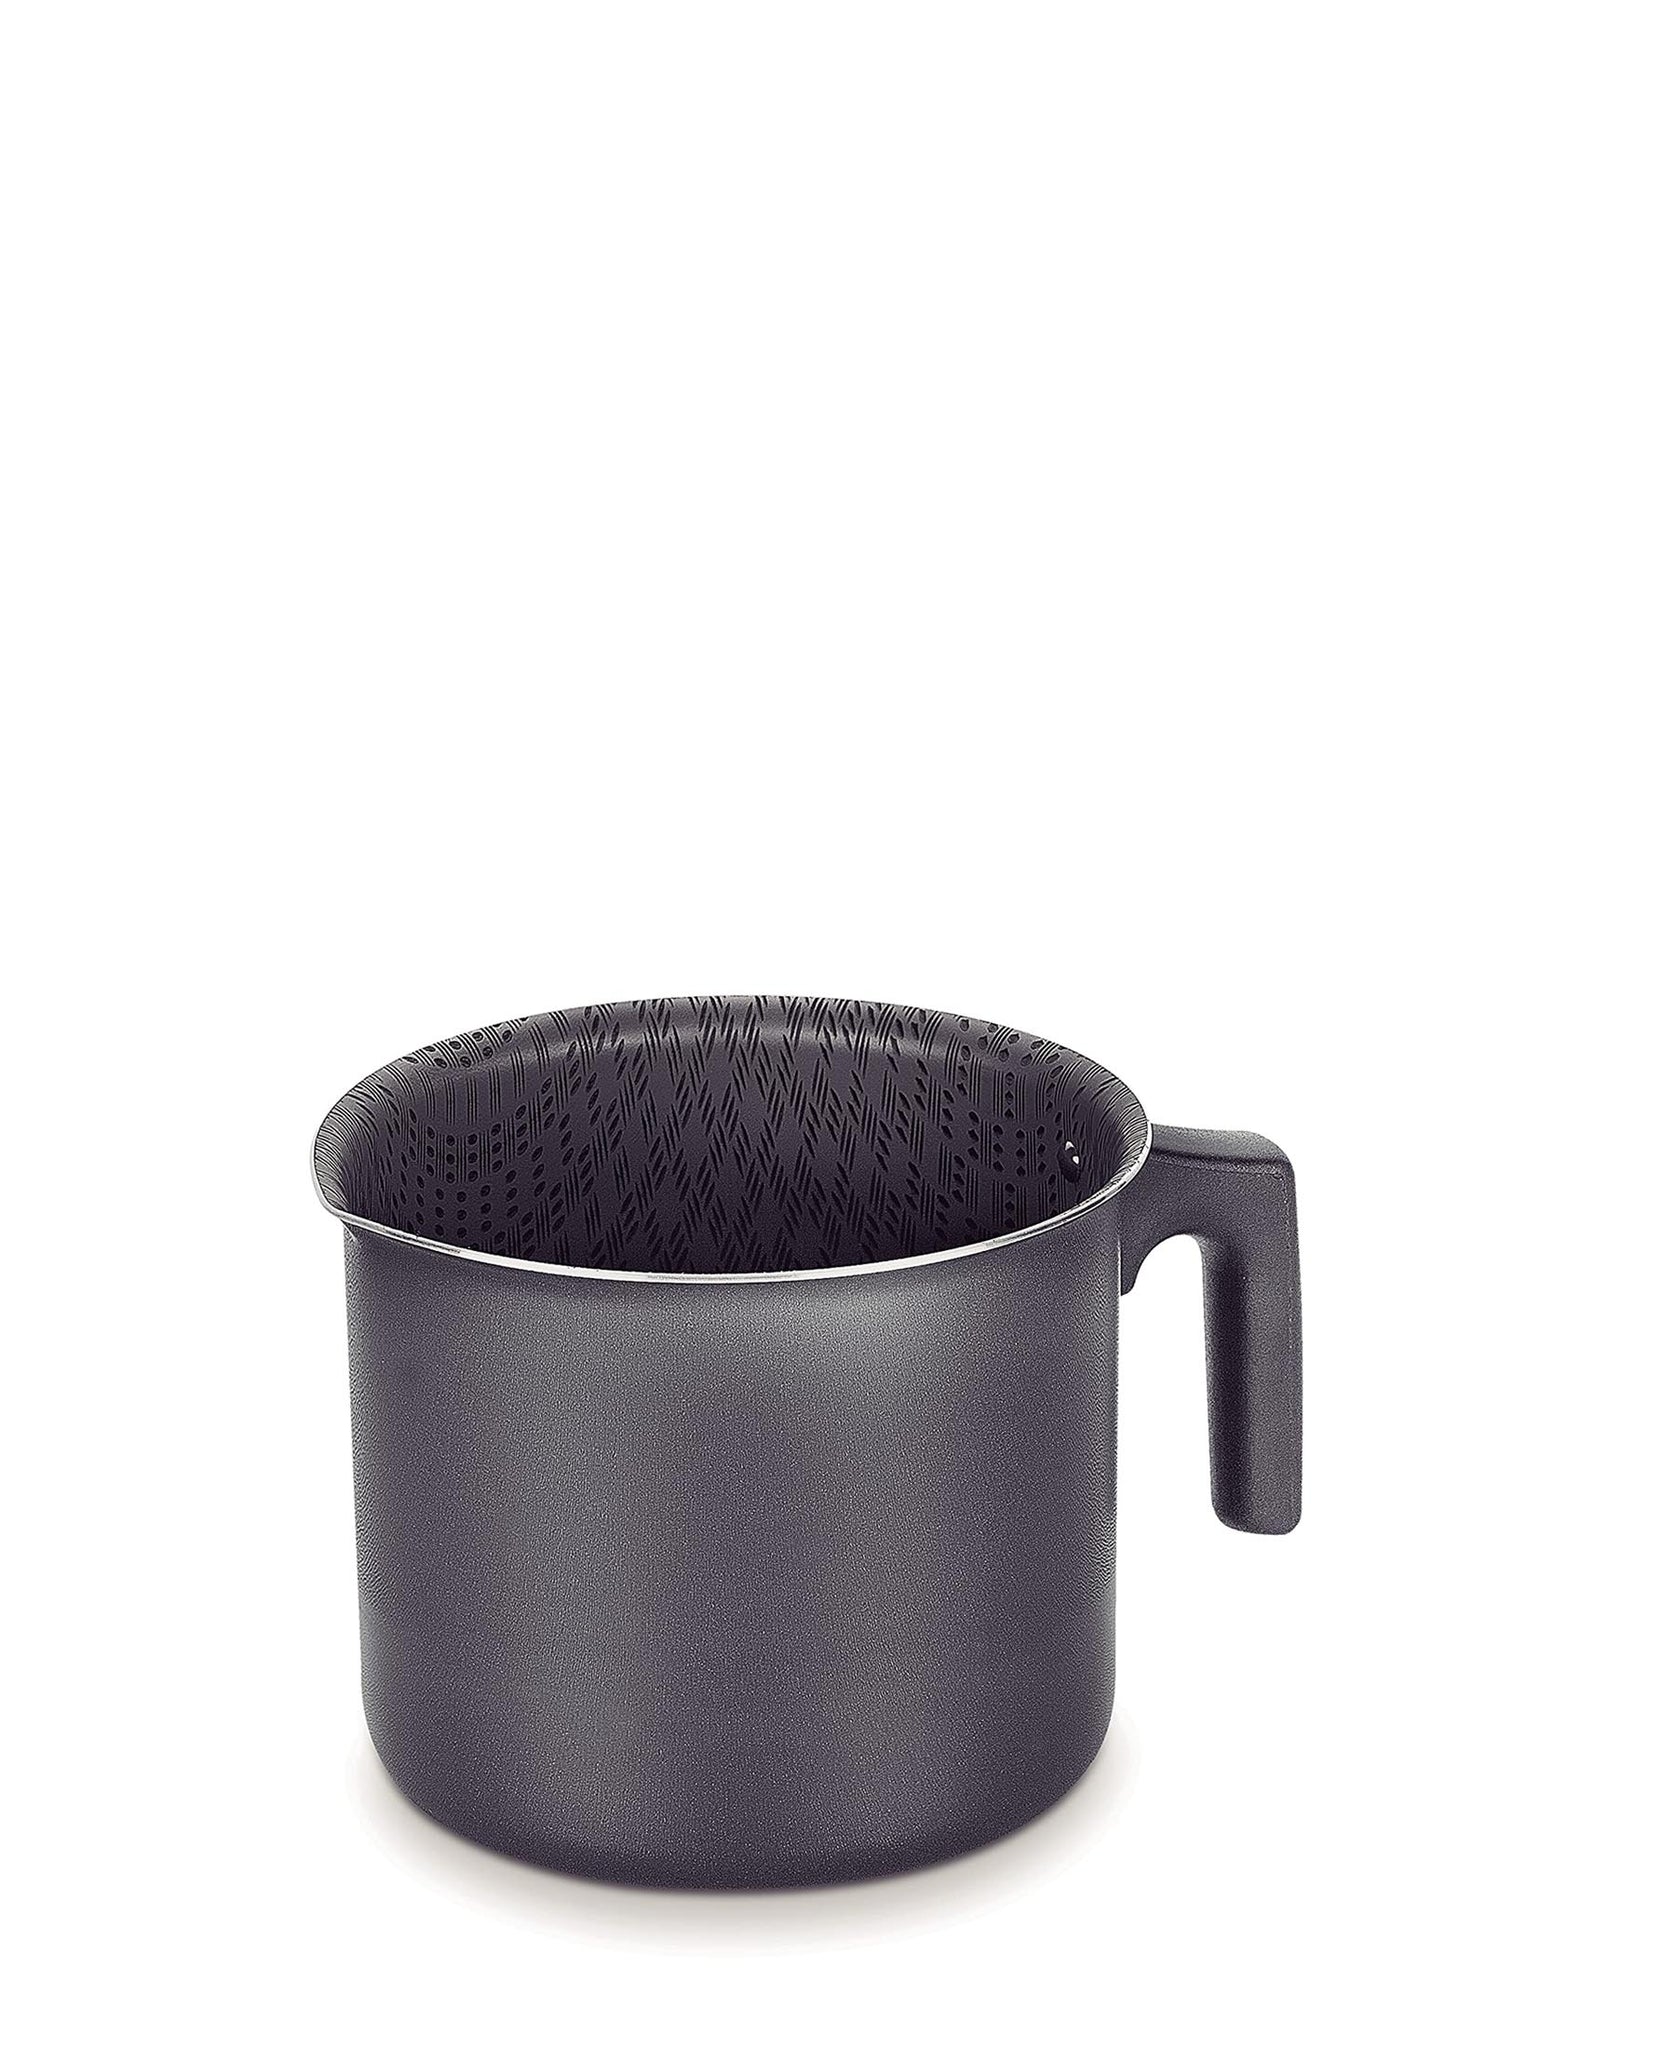 Tramontina Milk Boiler Pot 0.8 Litre - Black